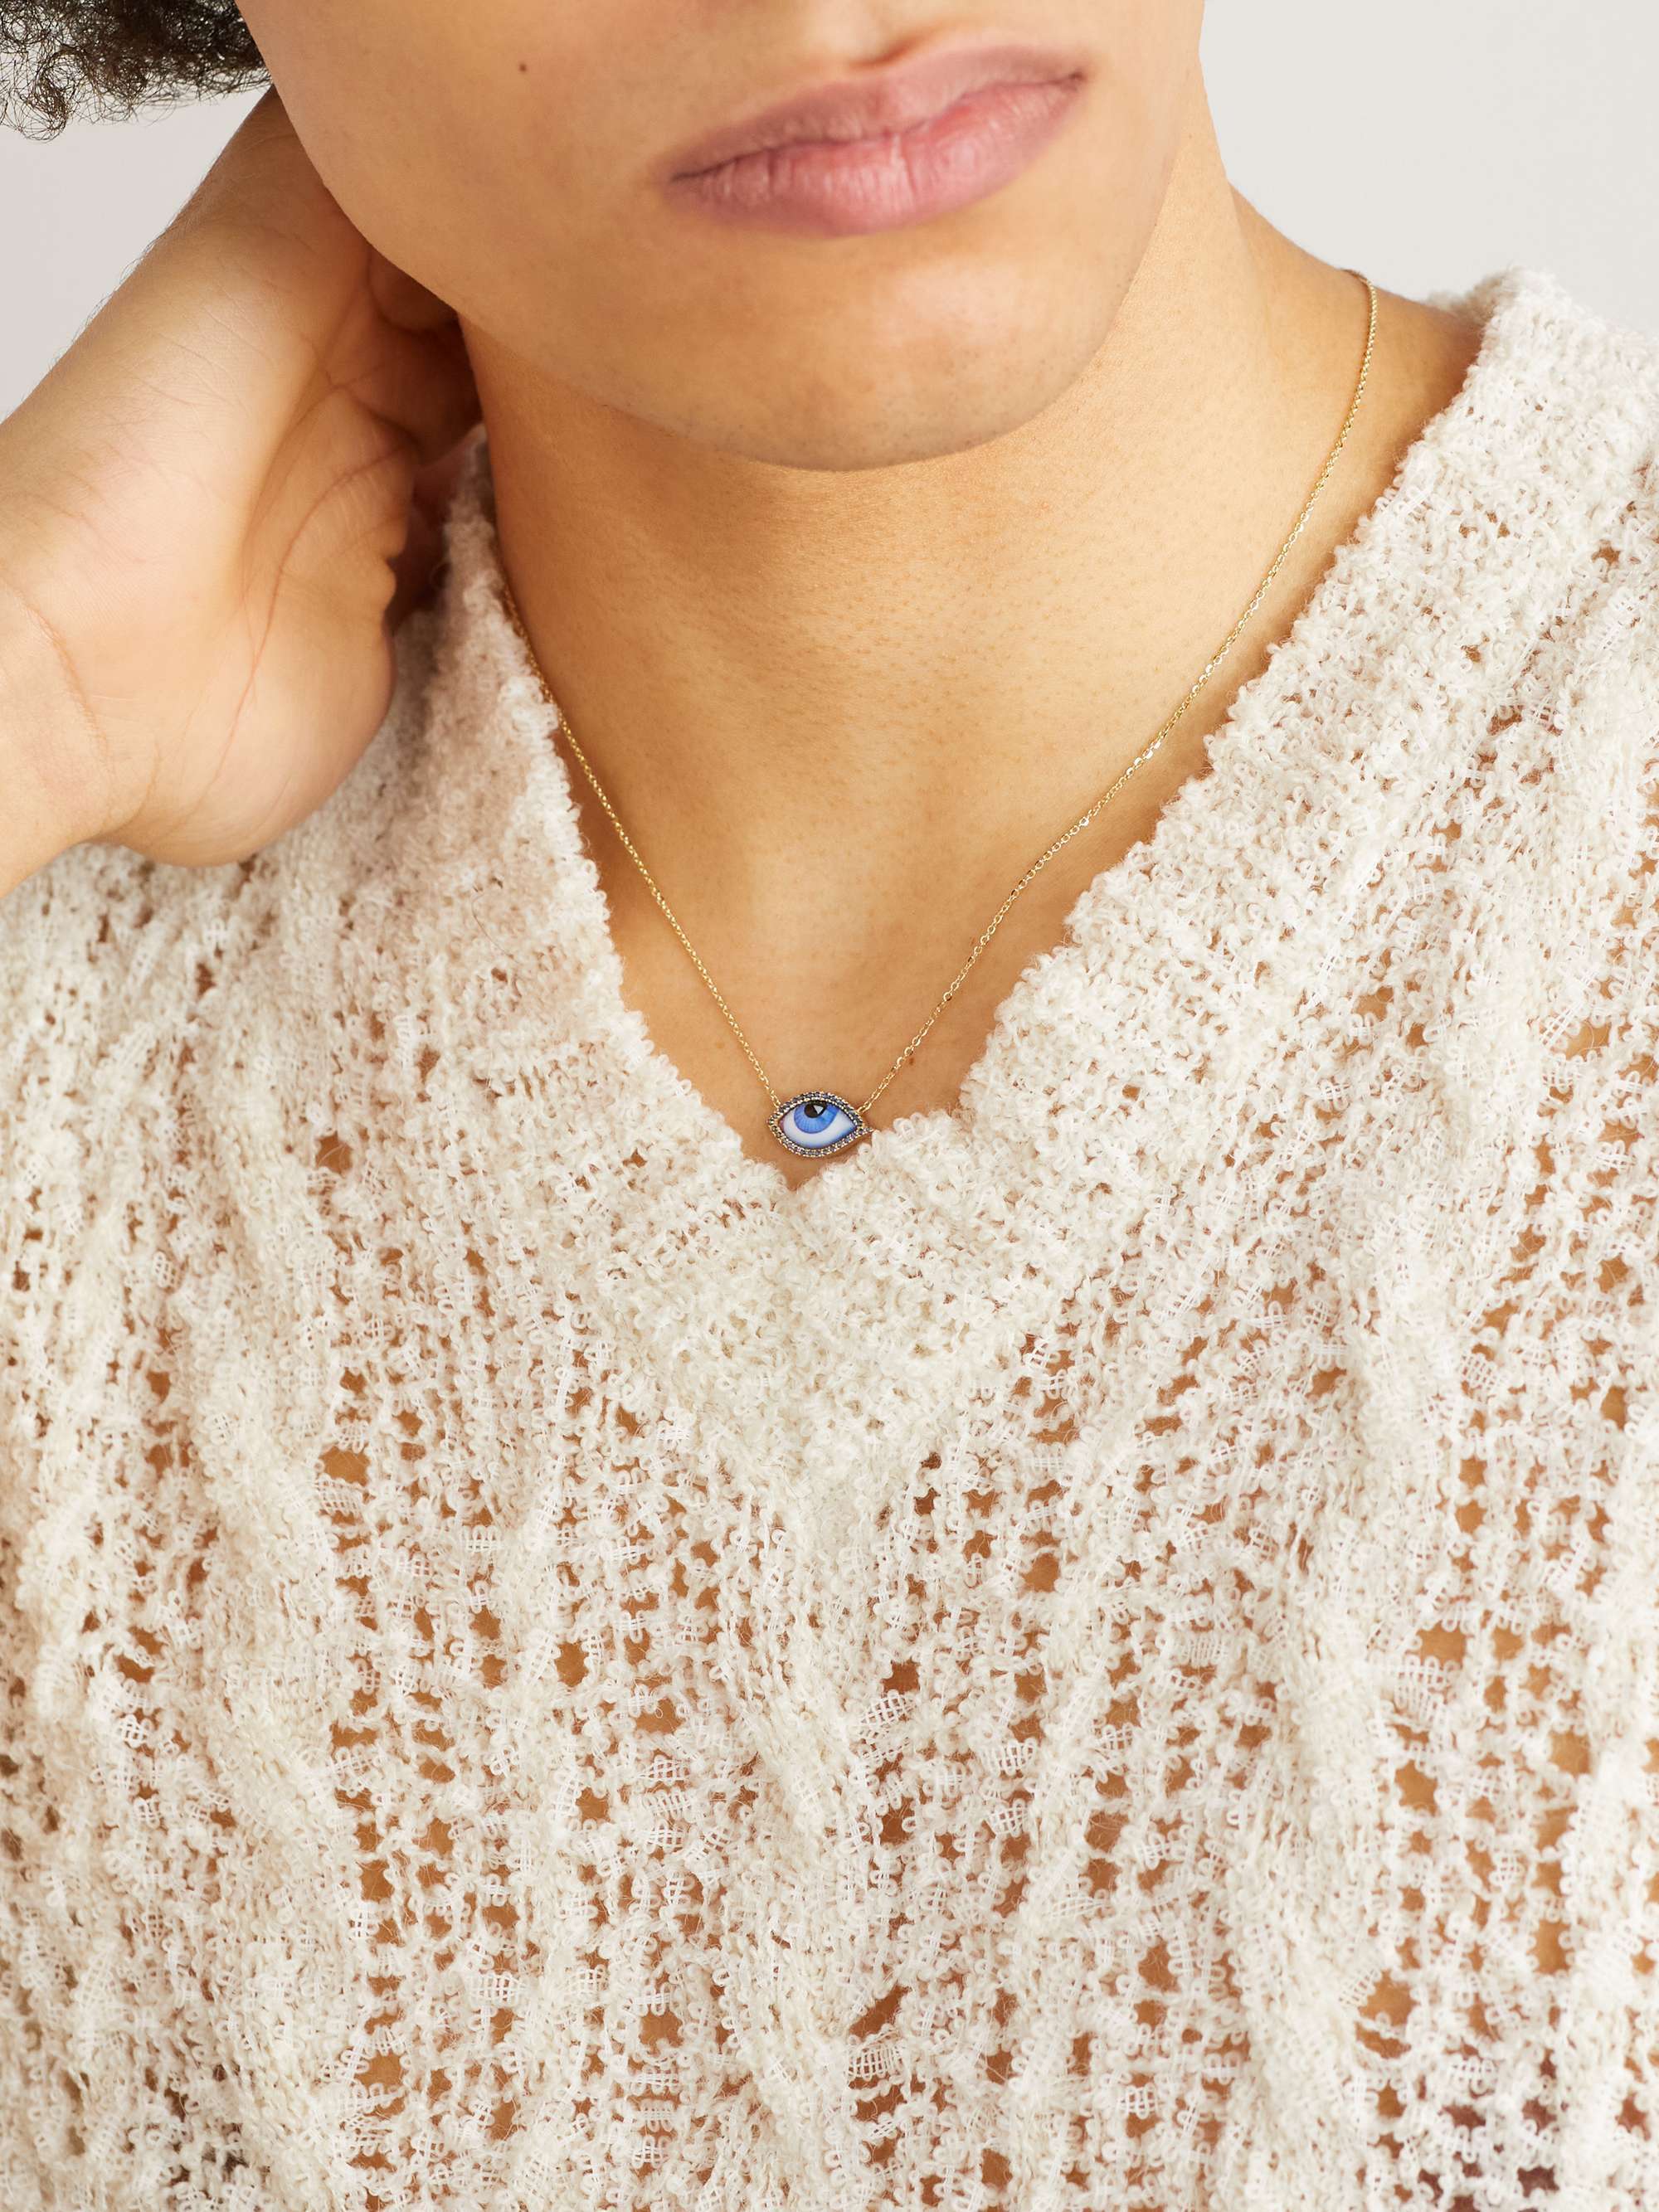 LITO Grand Bleu Gold, Enamel, Sapphire and Diamond Necklace